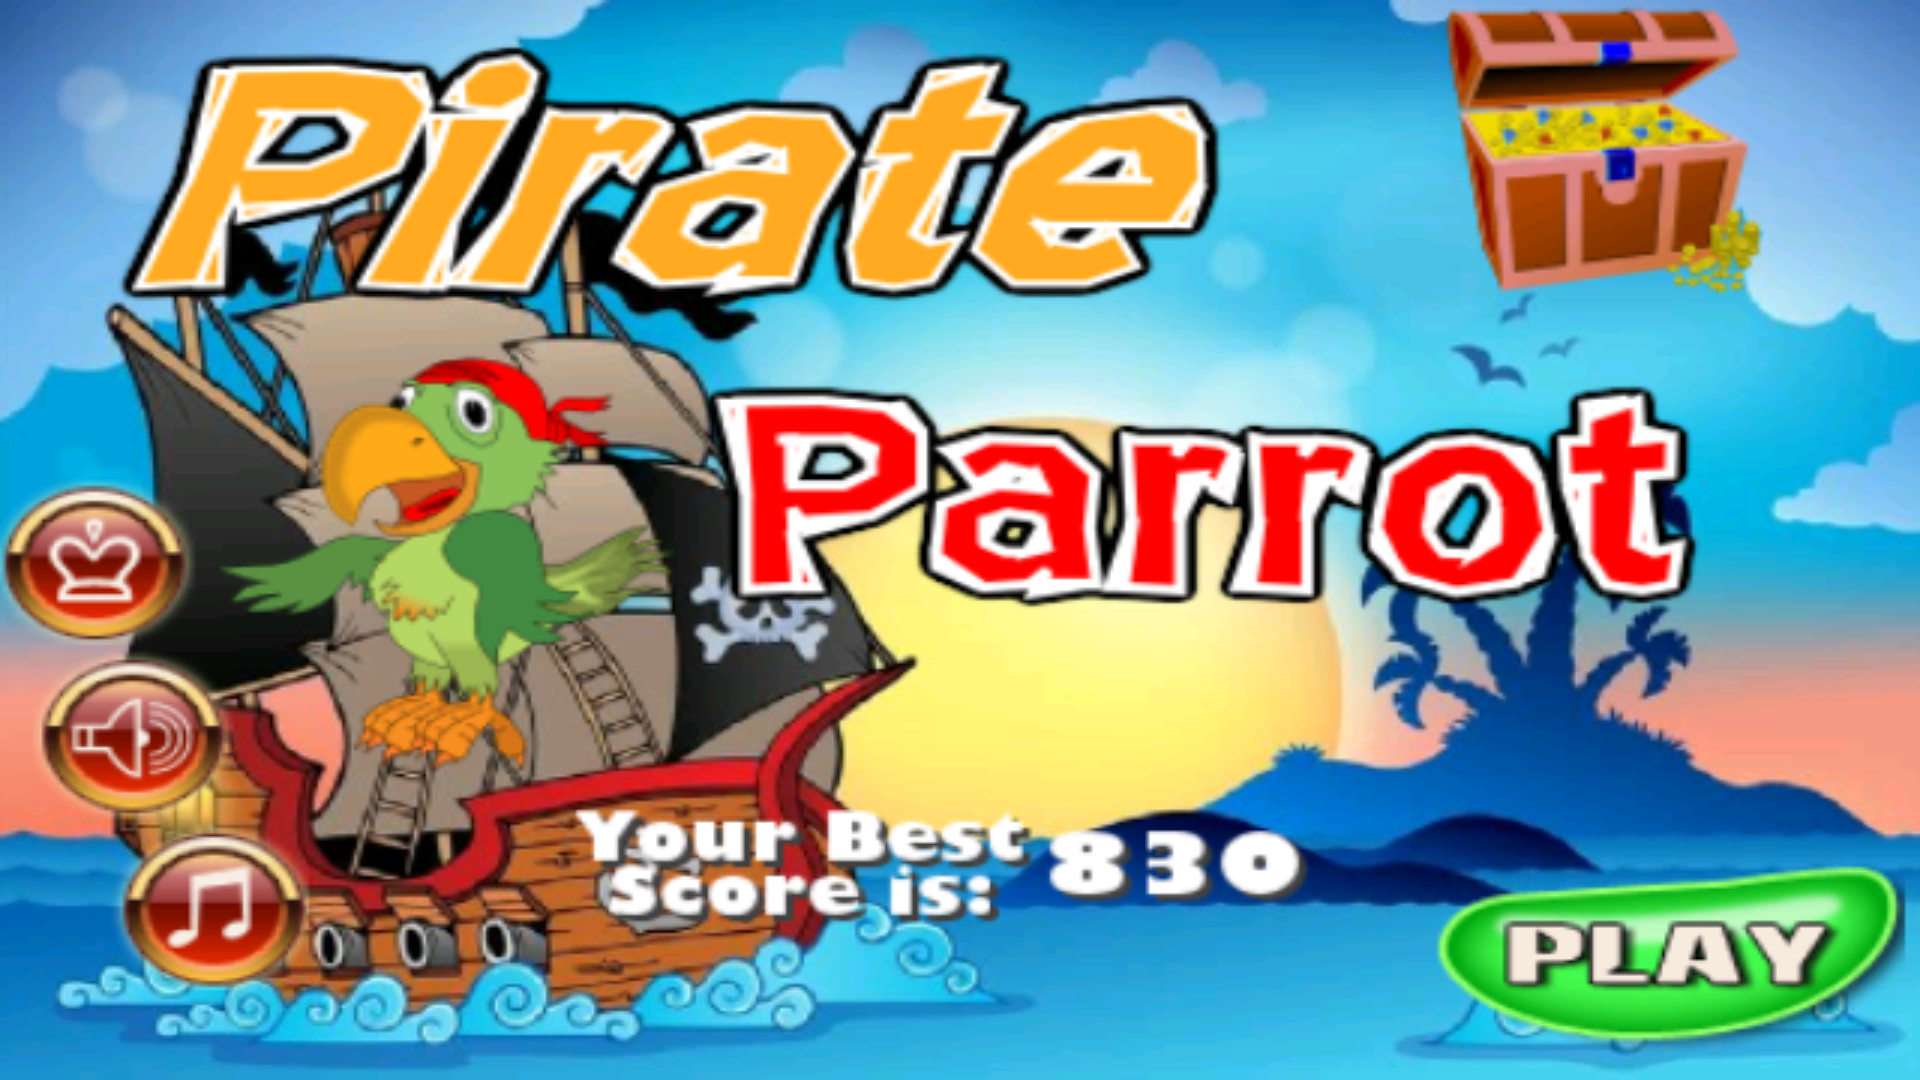 Android application Pirate Parrot. Treasure hunt screenshort